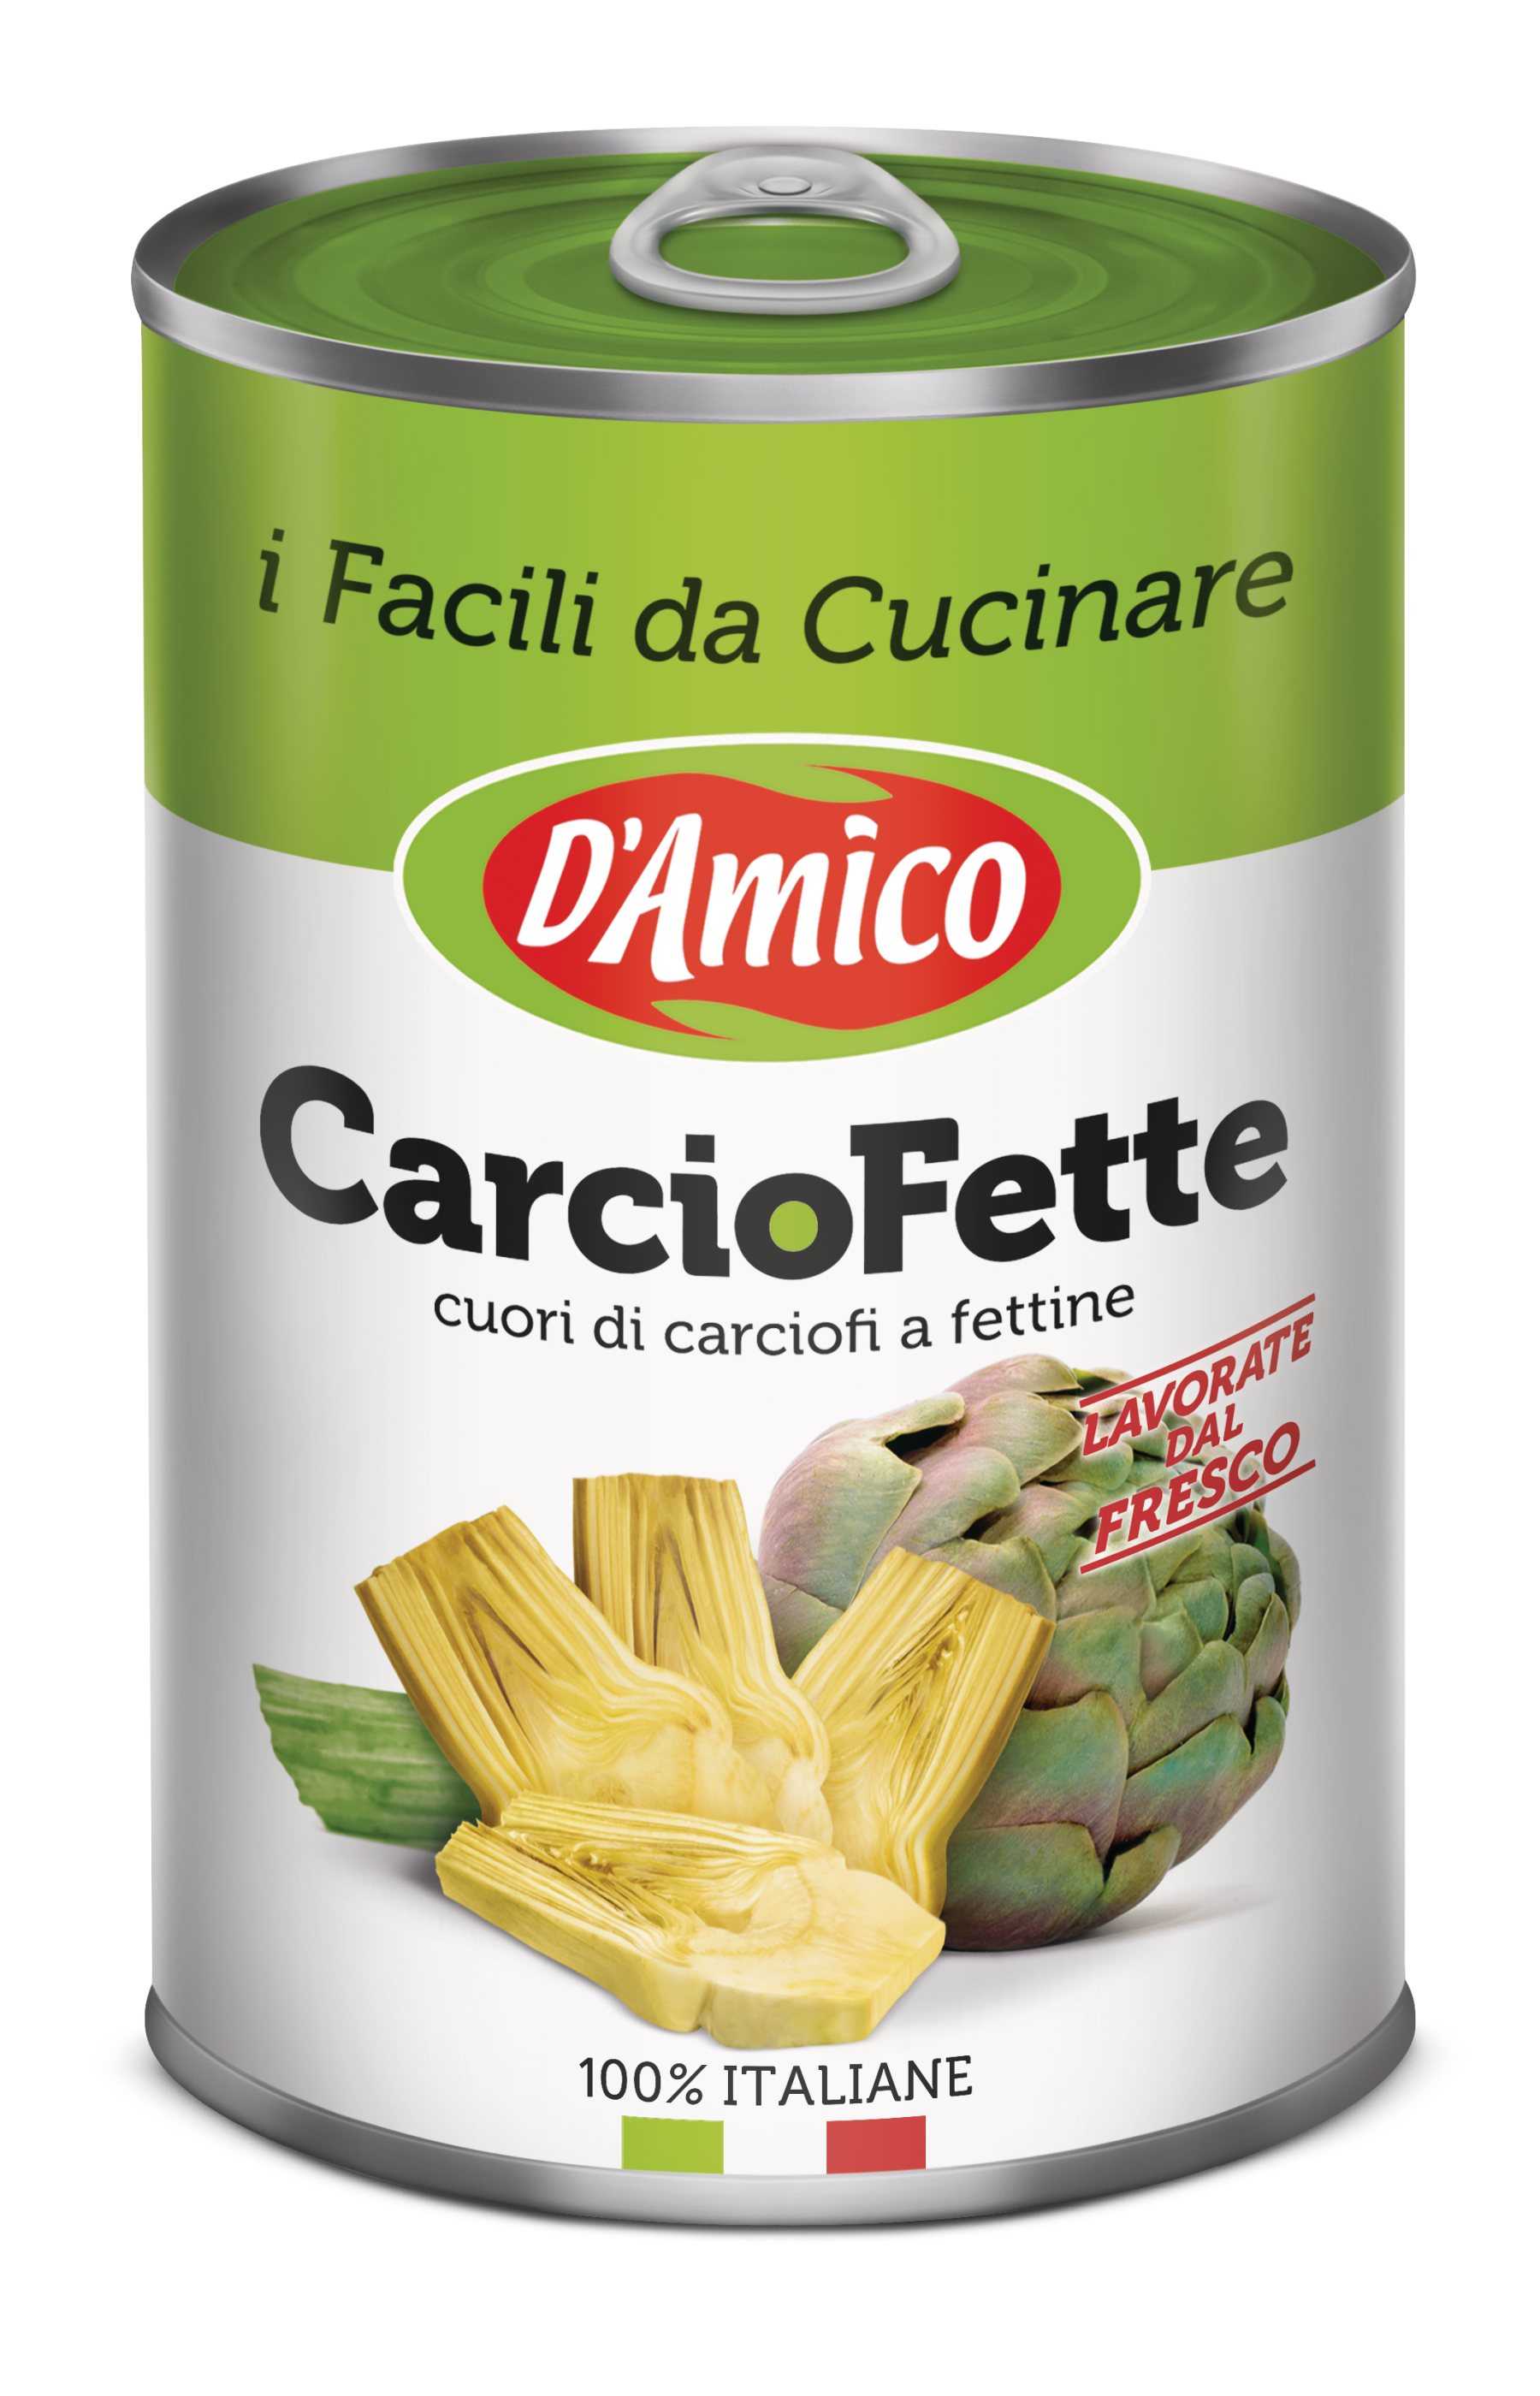 Carciofette "sliced artichoke hearts"